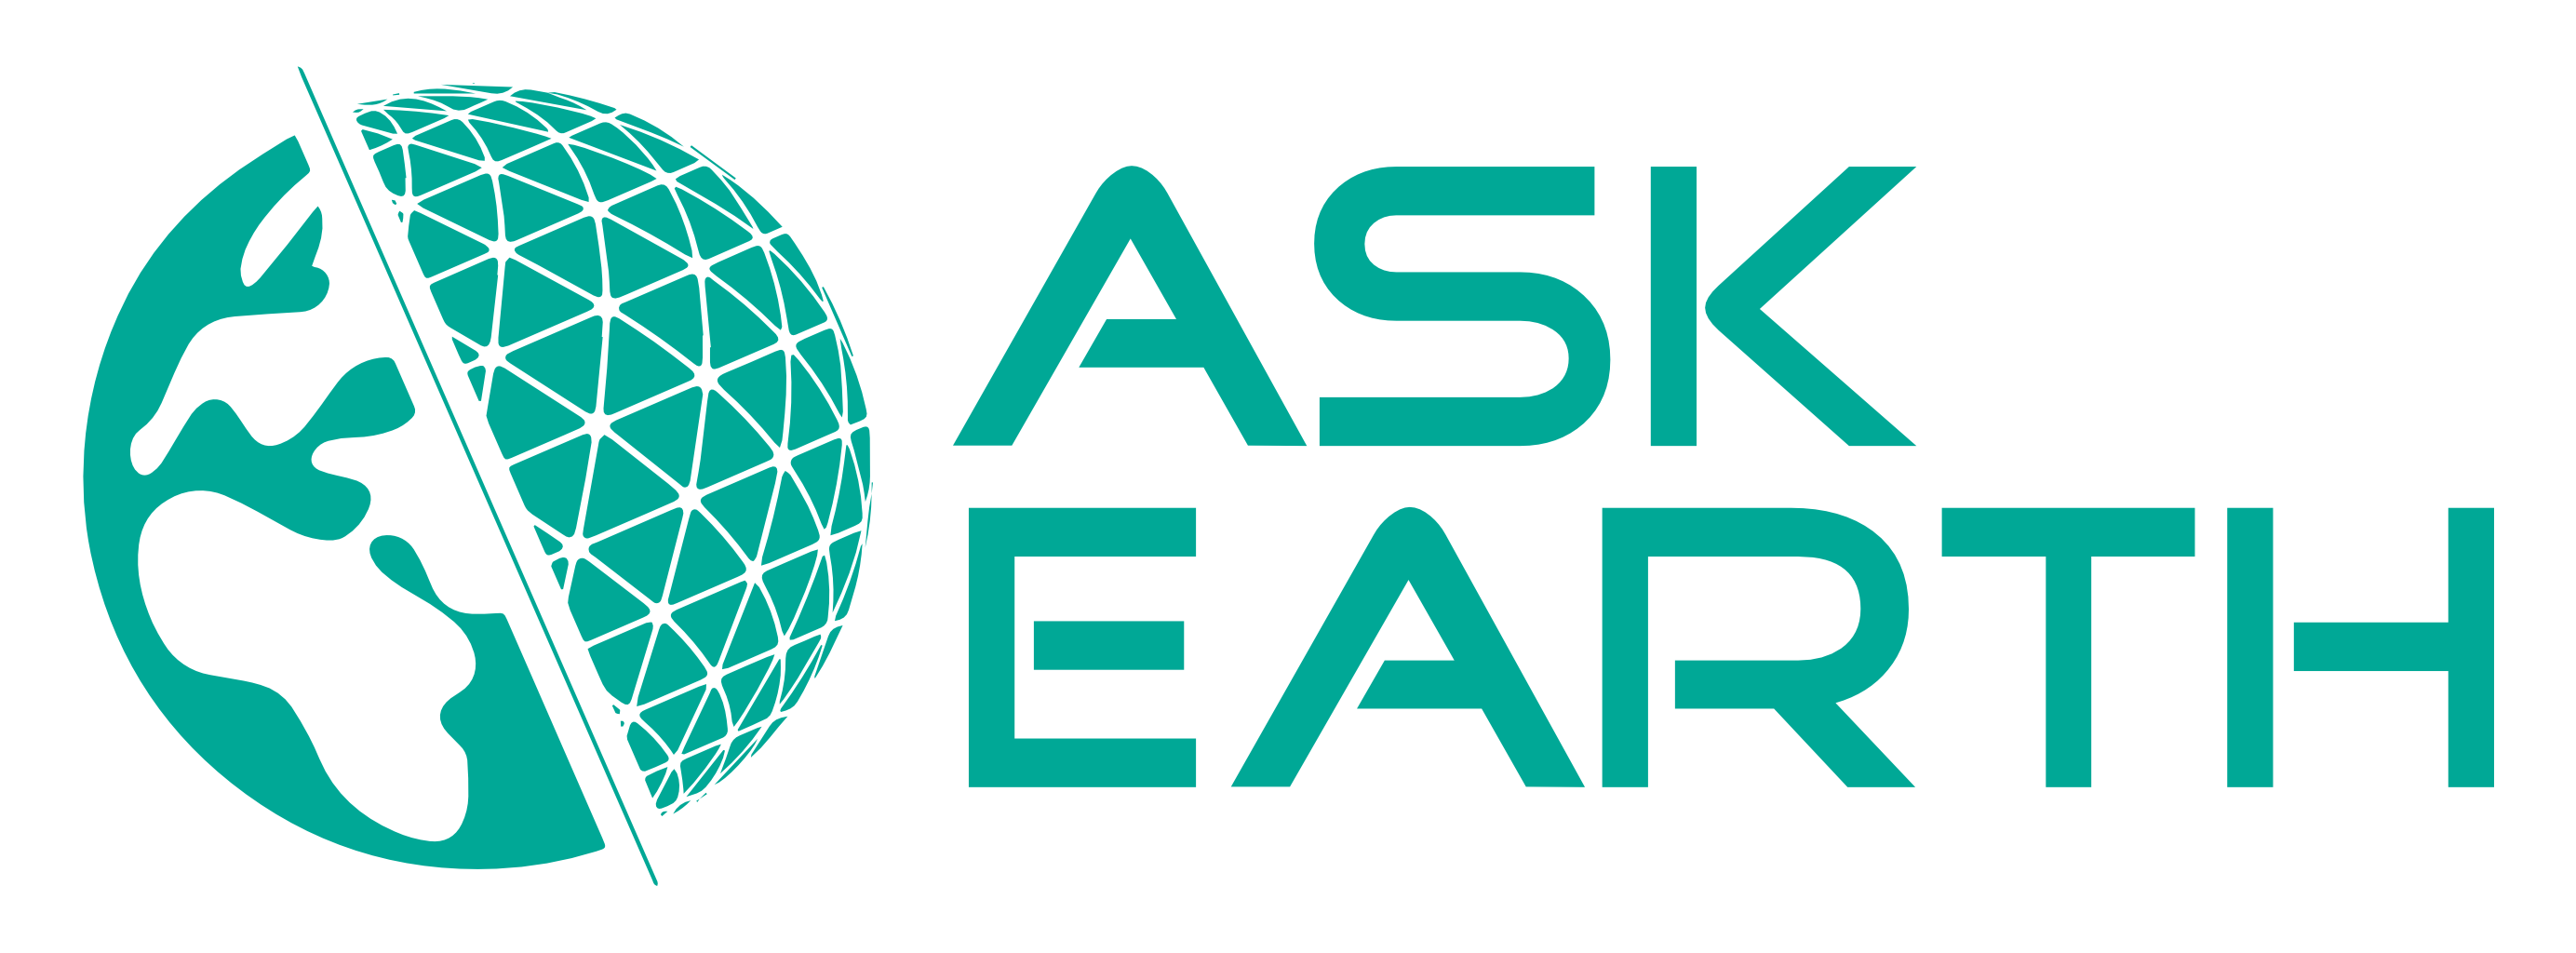 ask Earth logo